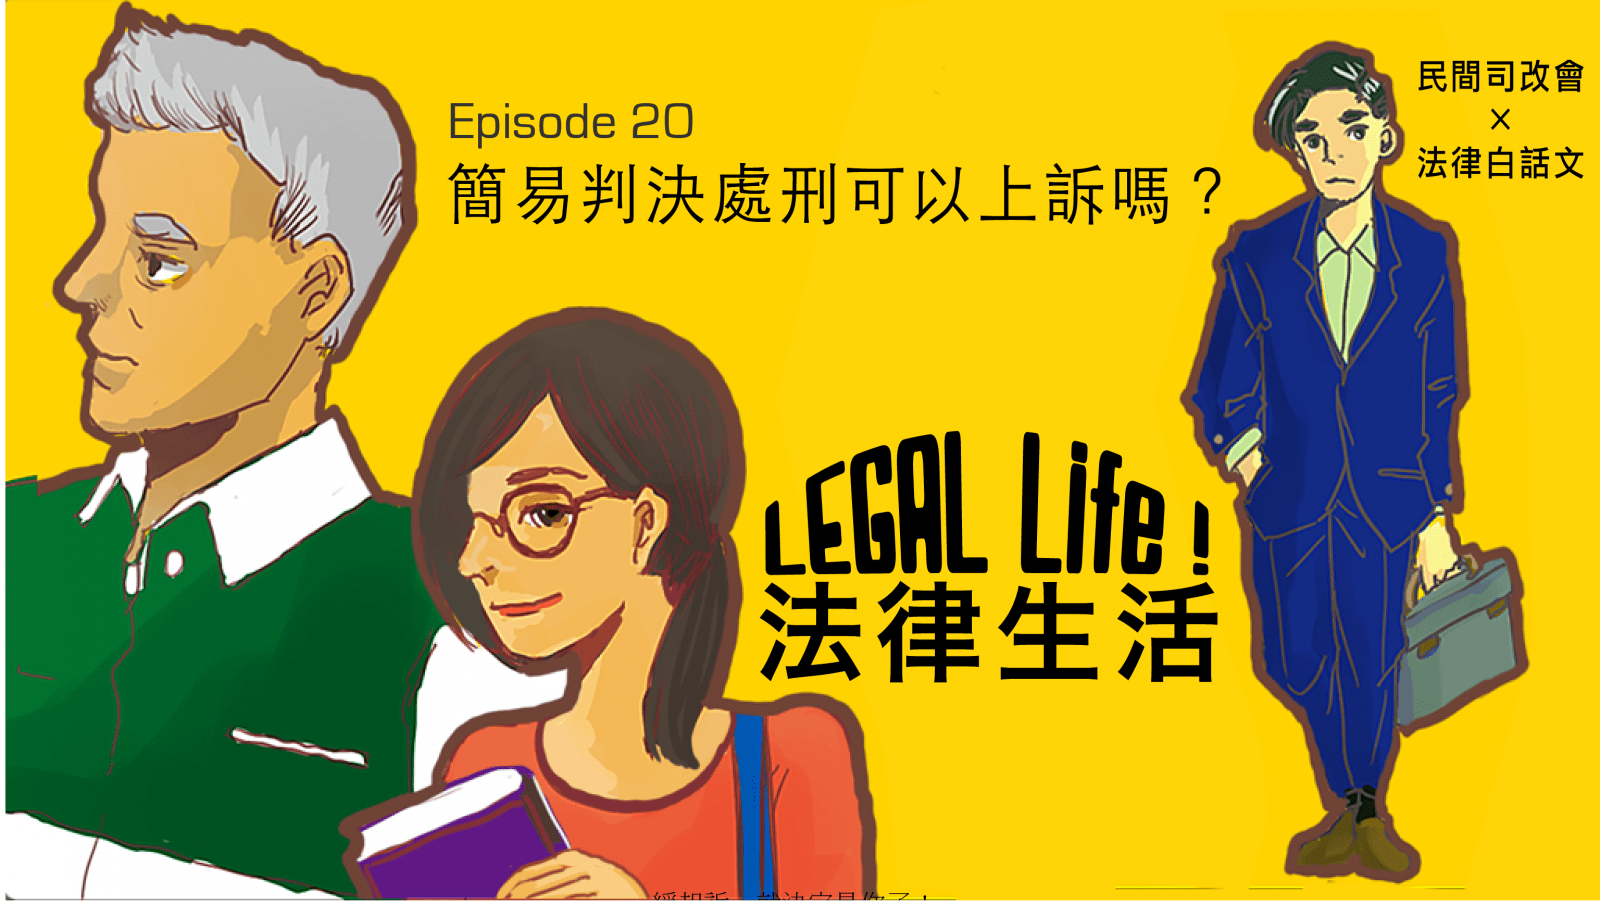 2016/10/legal-life20.png